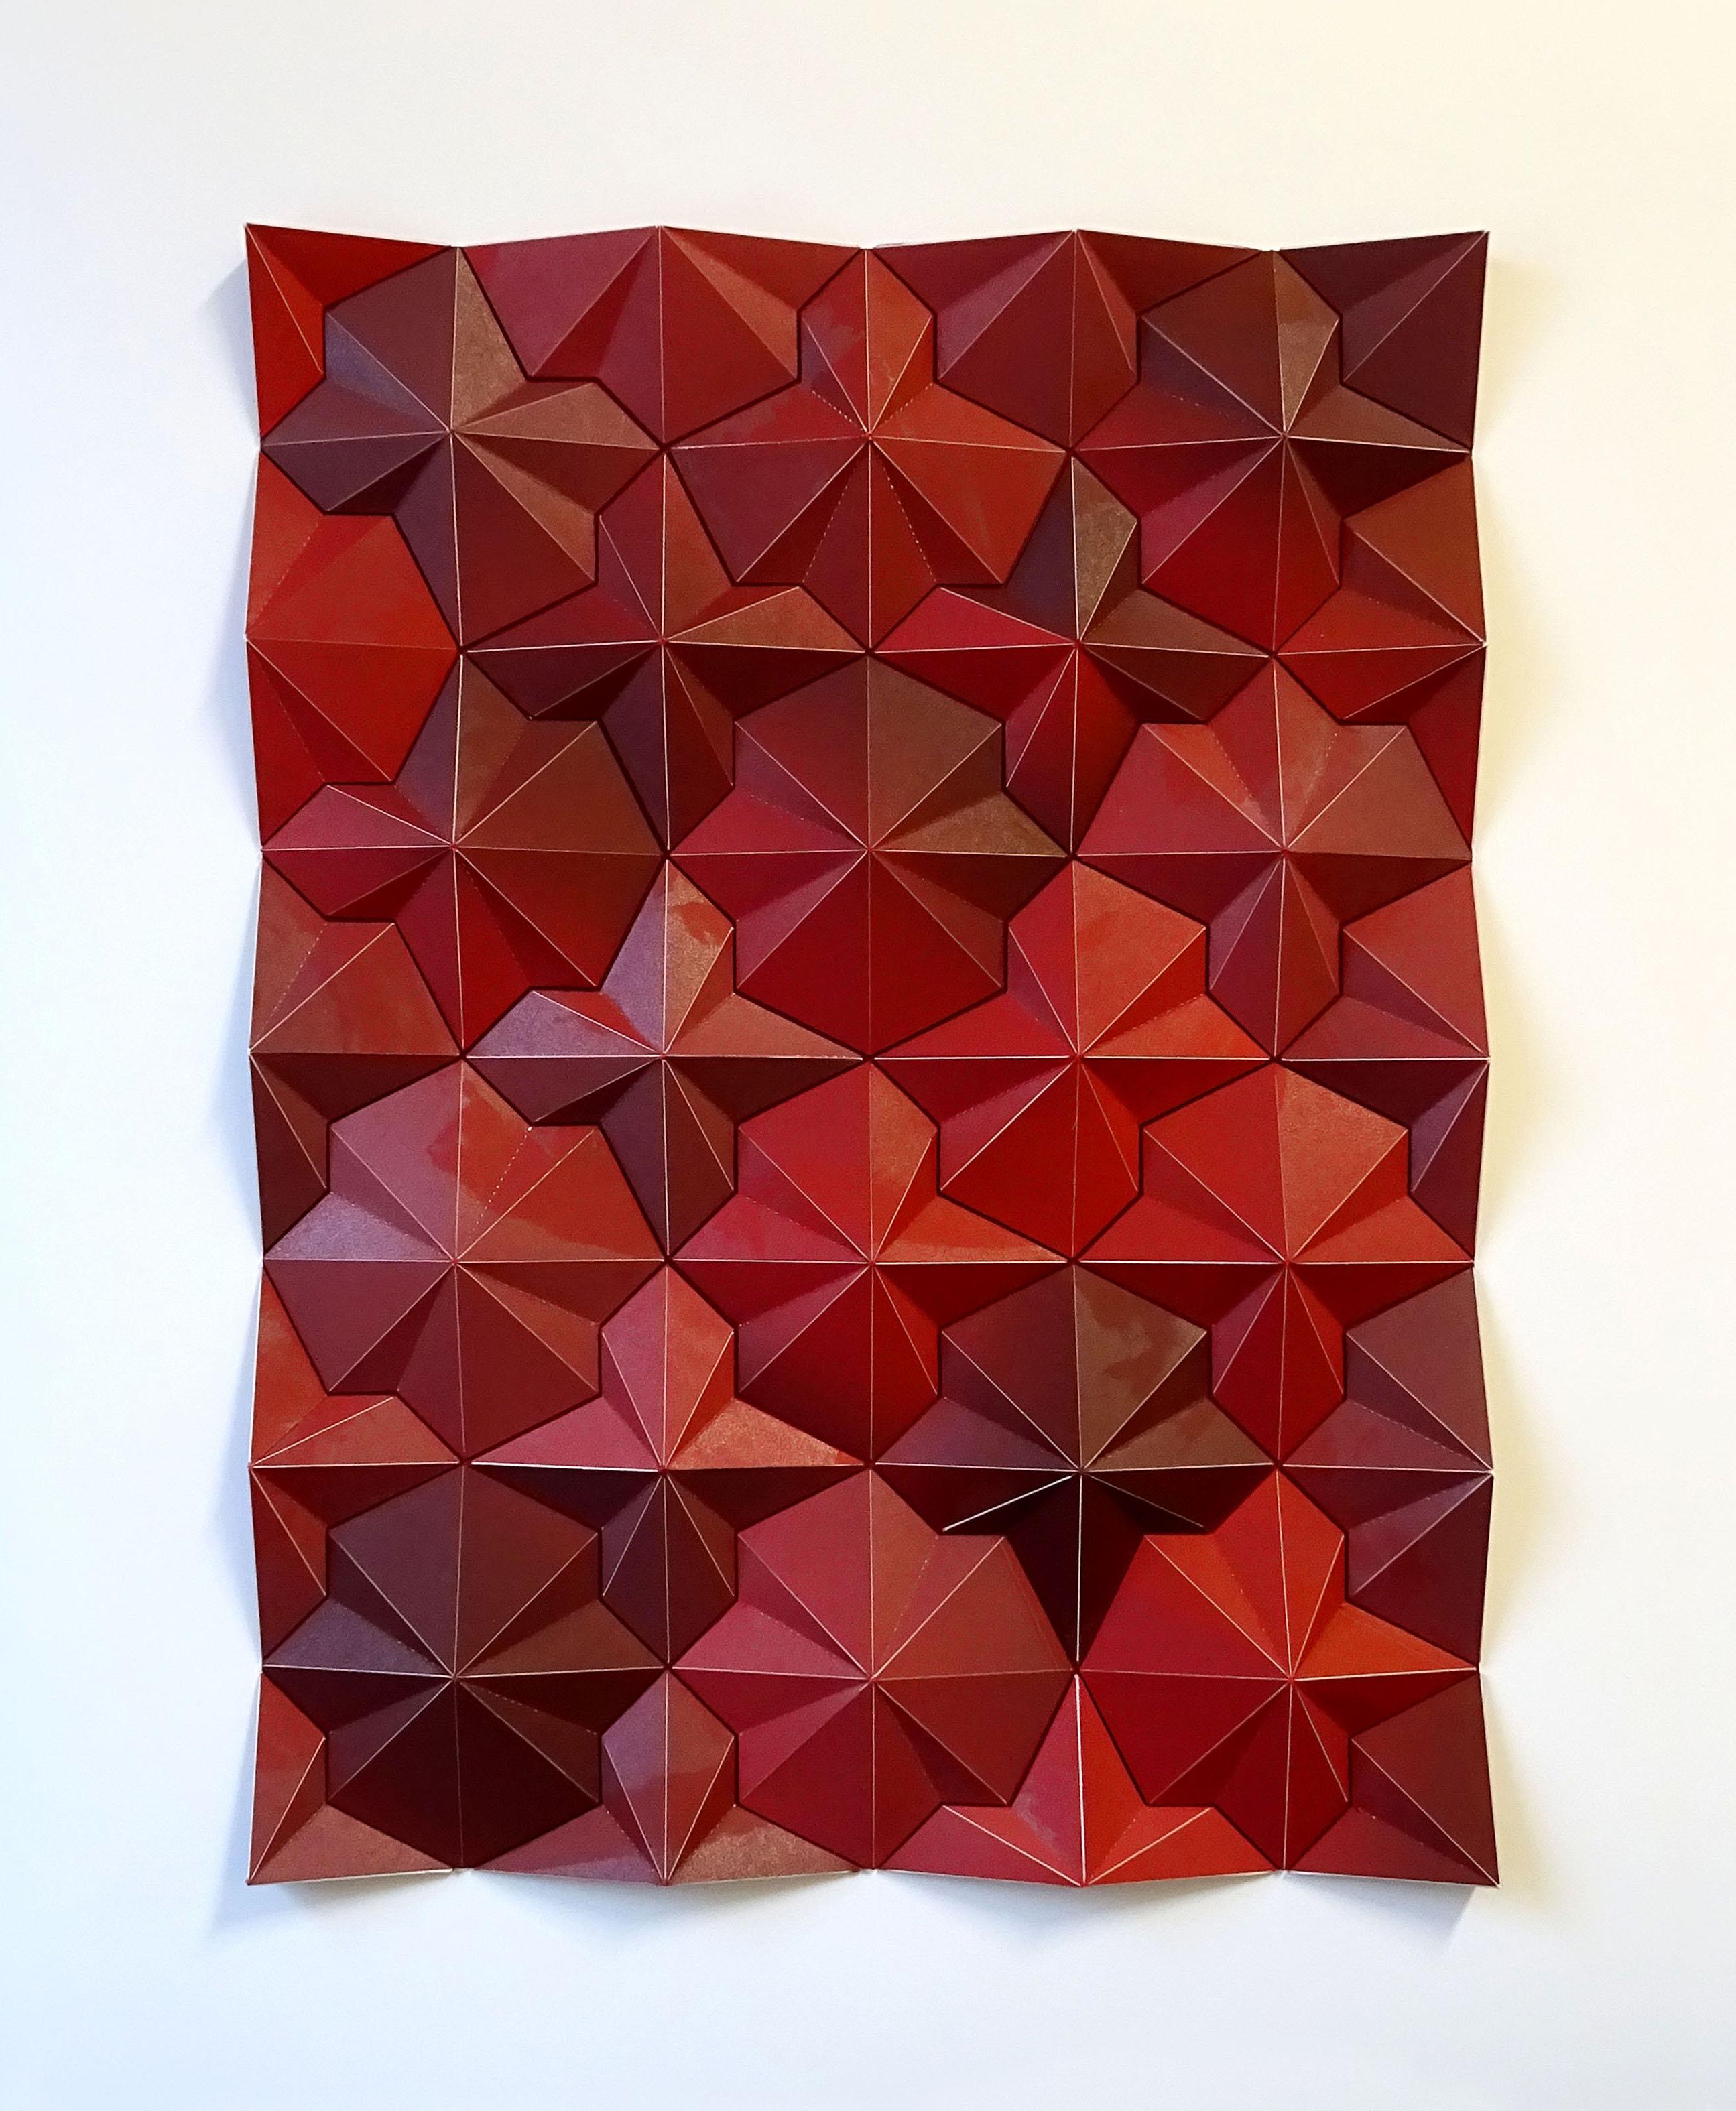 Matt Shlian Abstract Print - Ara 318 Red on Red